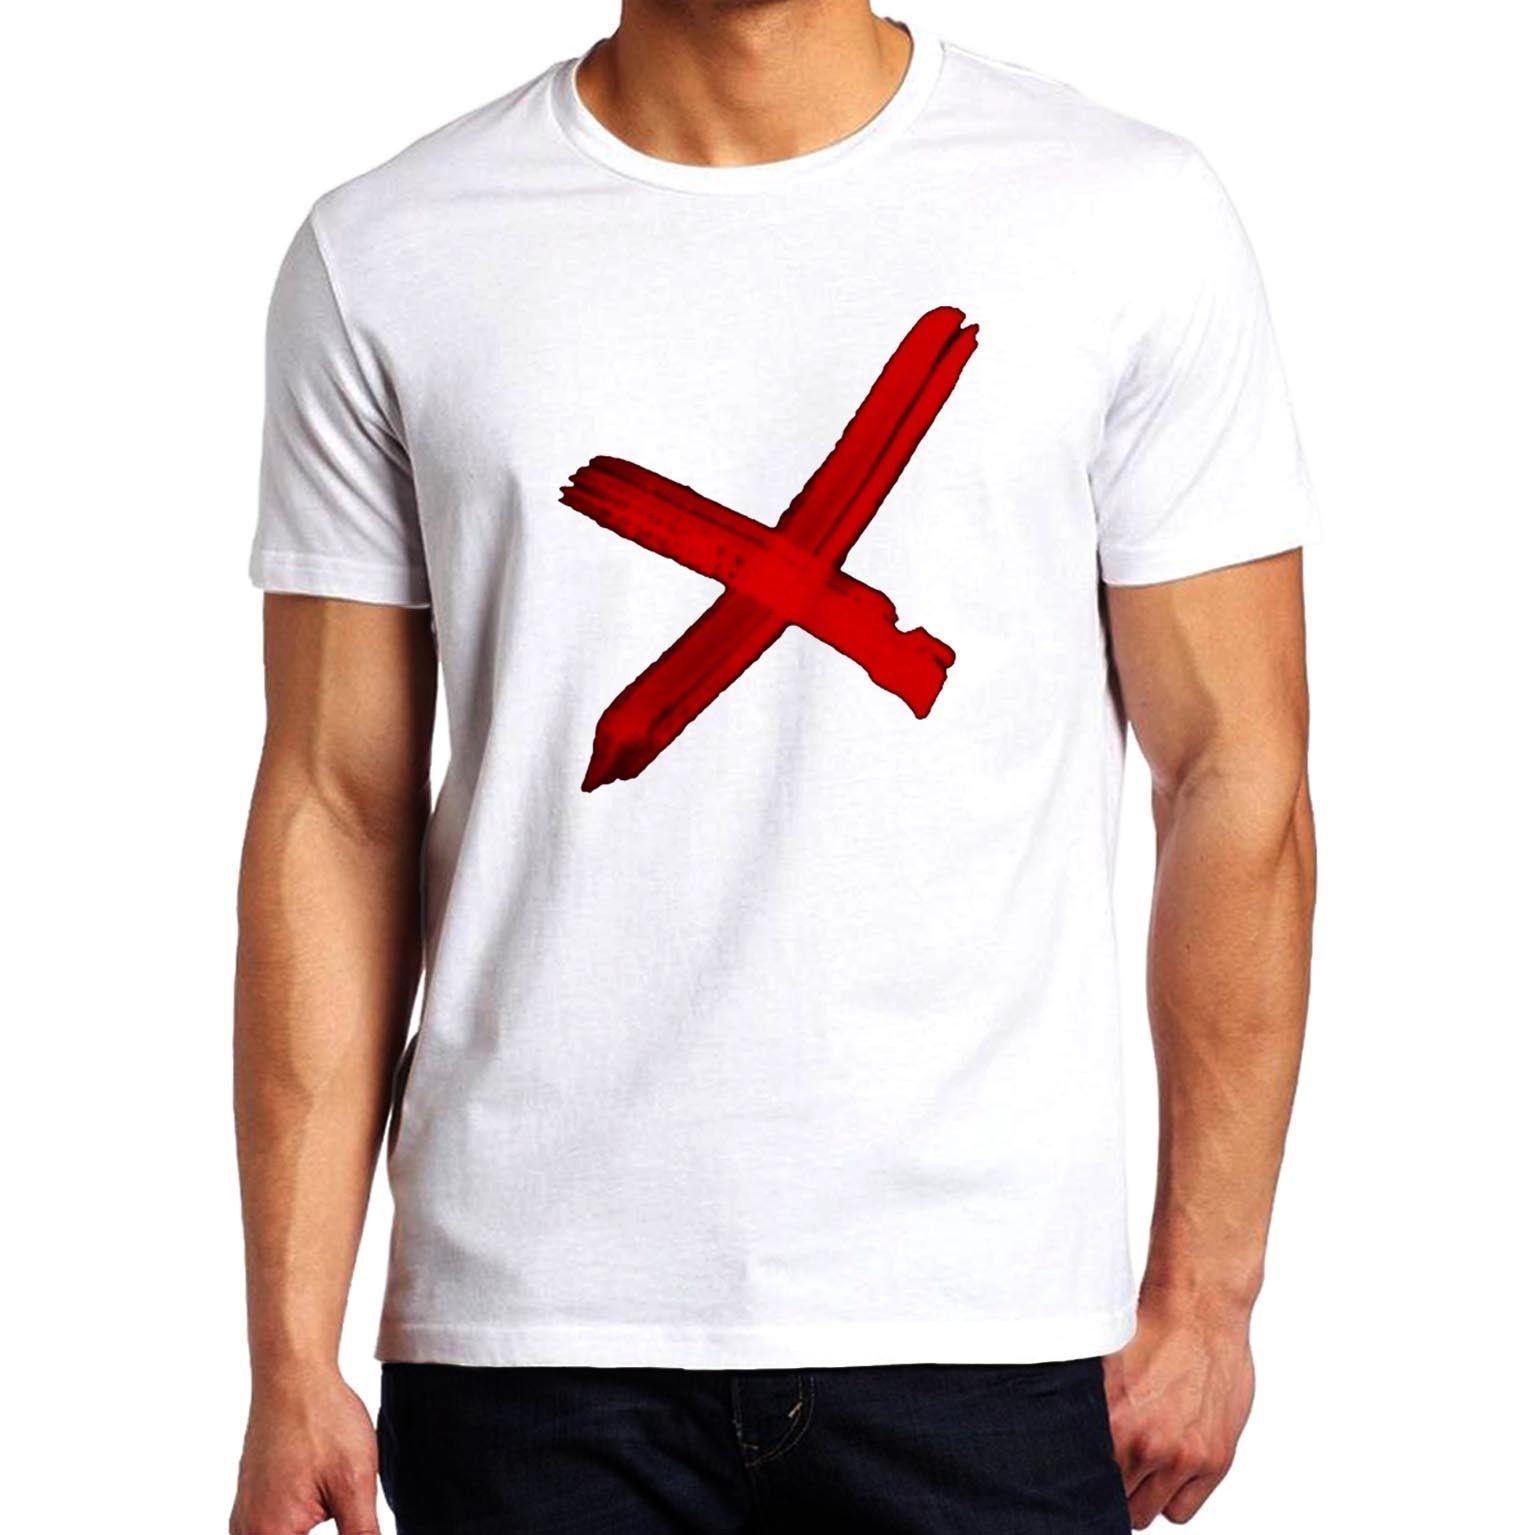 Chris Brown X Logo - Chris Brown X Shirt Logo Tshirt Cool Looking T Shirts Buy Designer